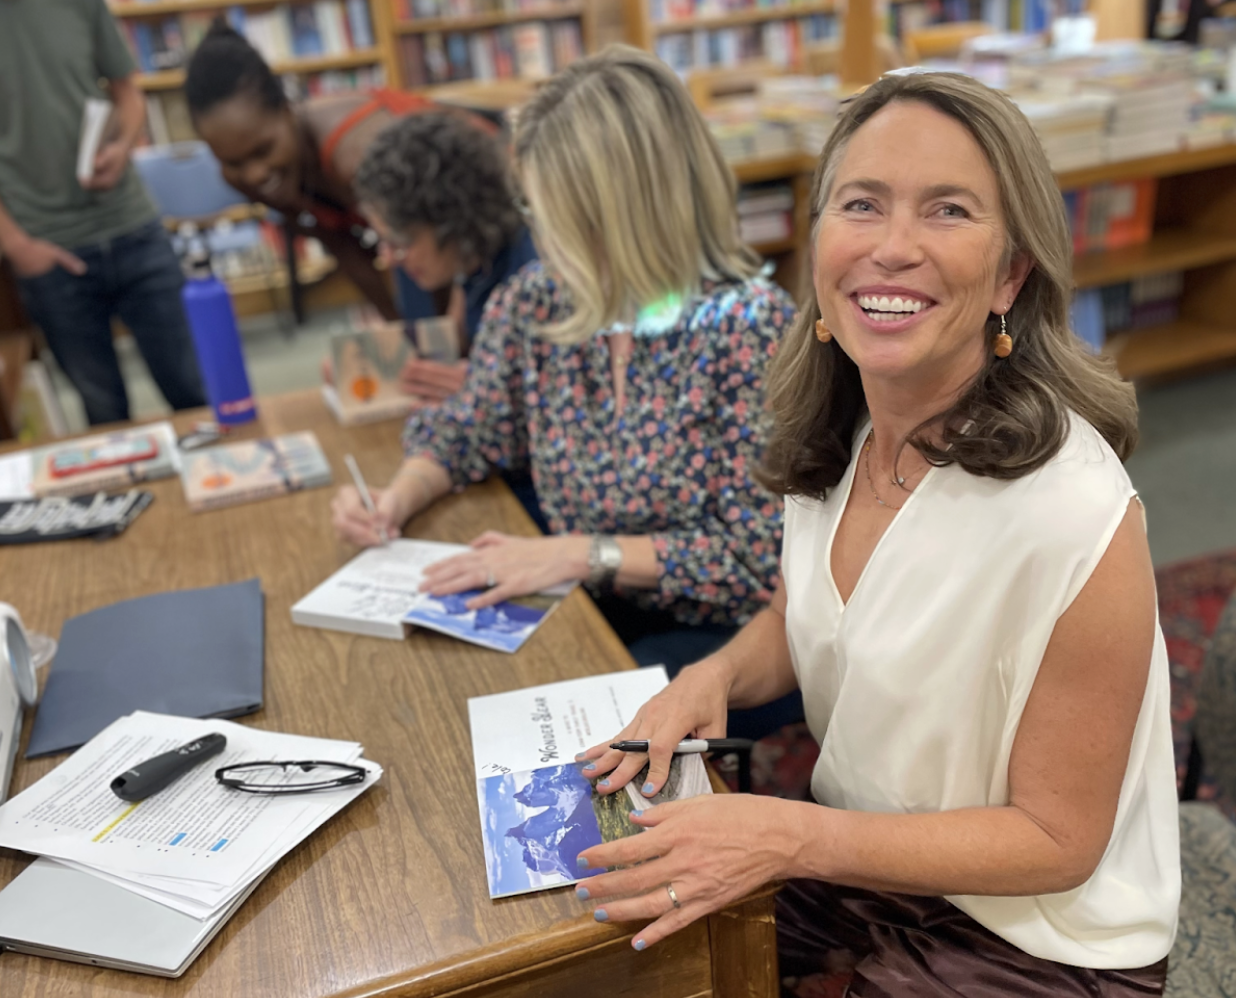 Woman smiles at camera during book-signing